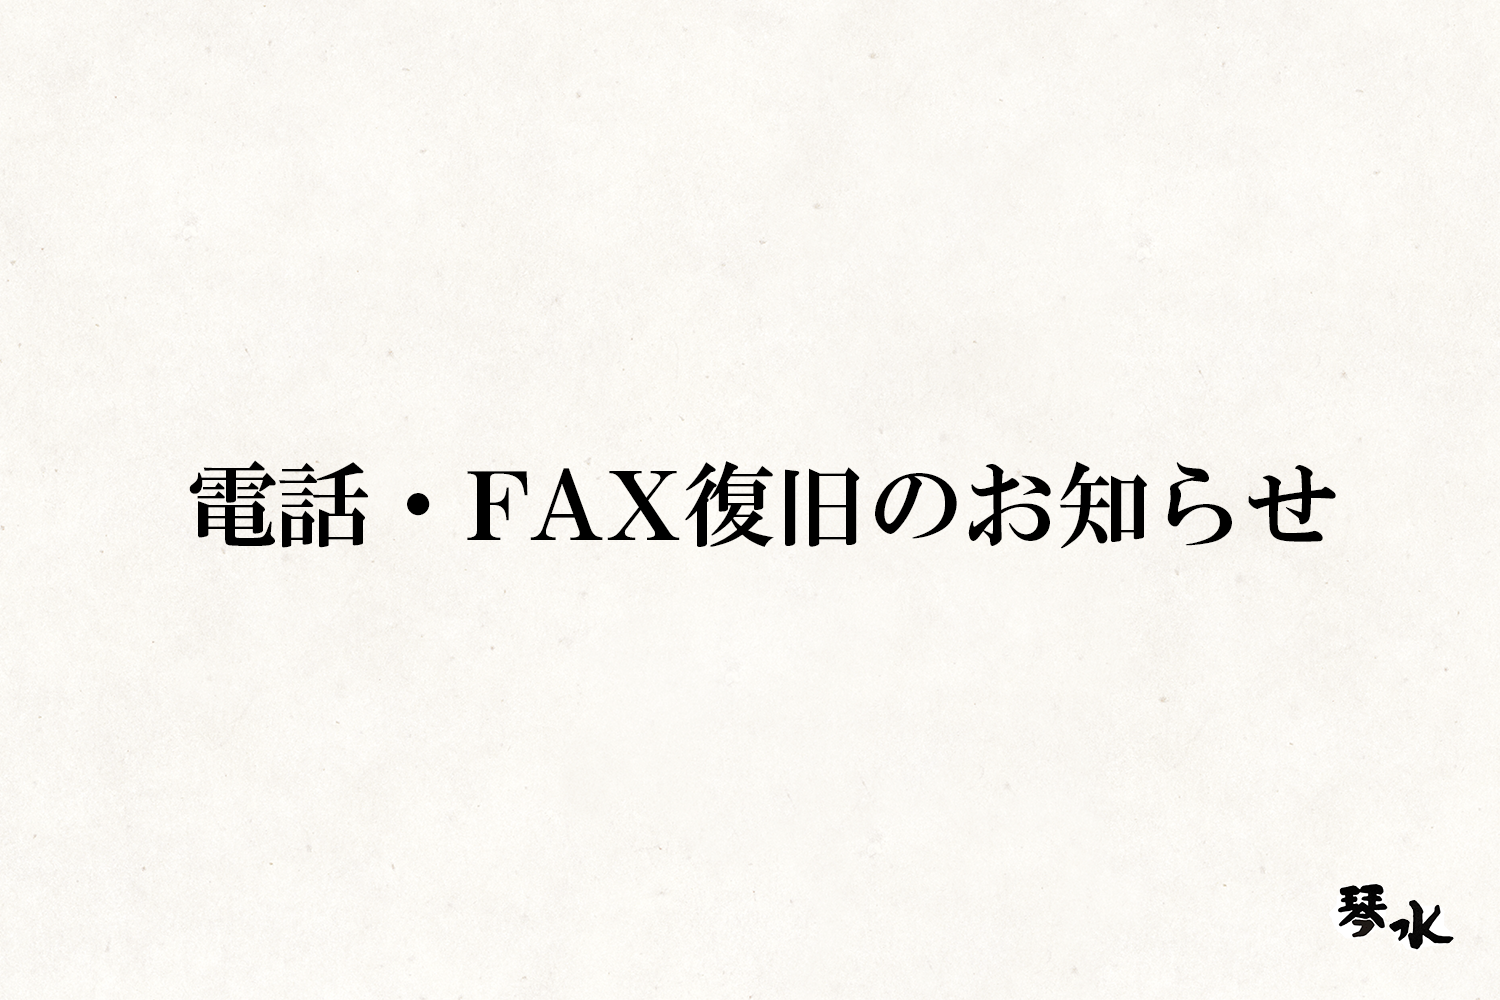 denwa/fax/recovery